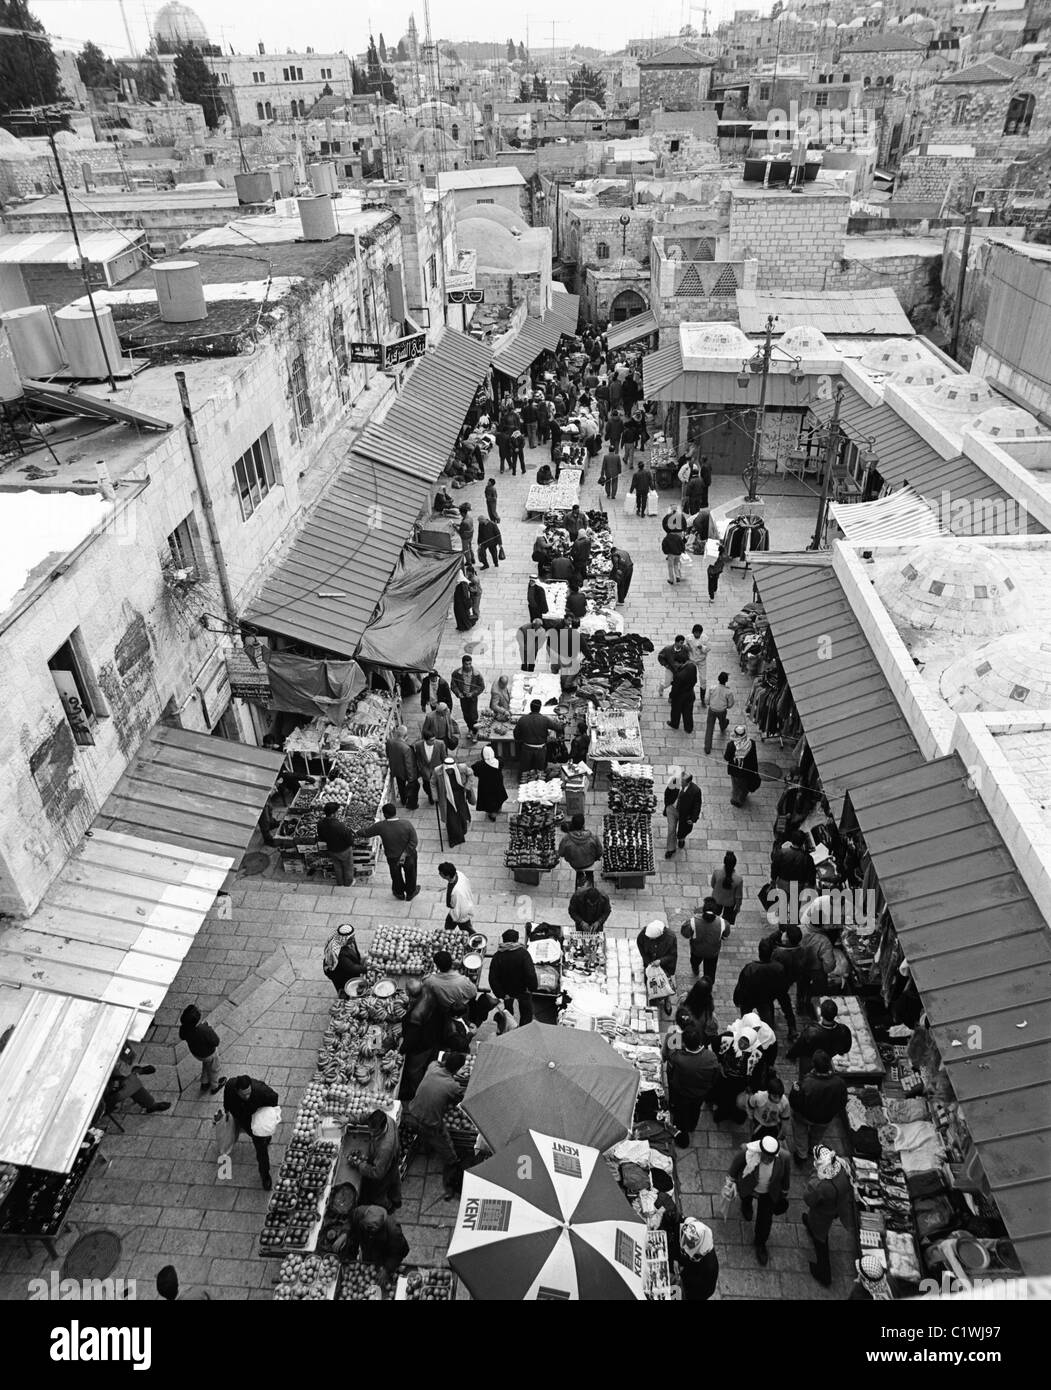 Street Market, quartiere arabo, la Città Vecchia di Gerusalemme, Israele Foto Stock